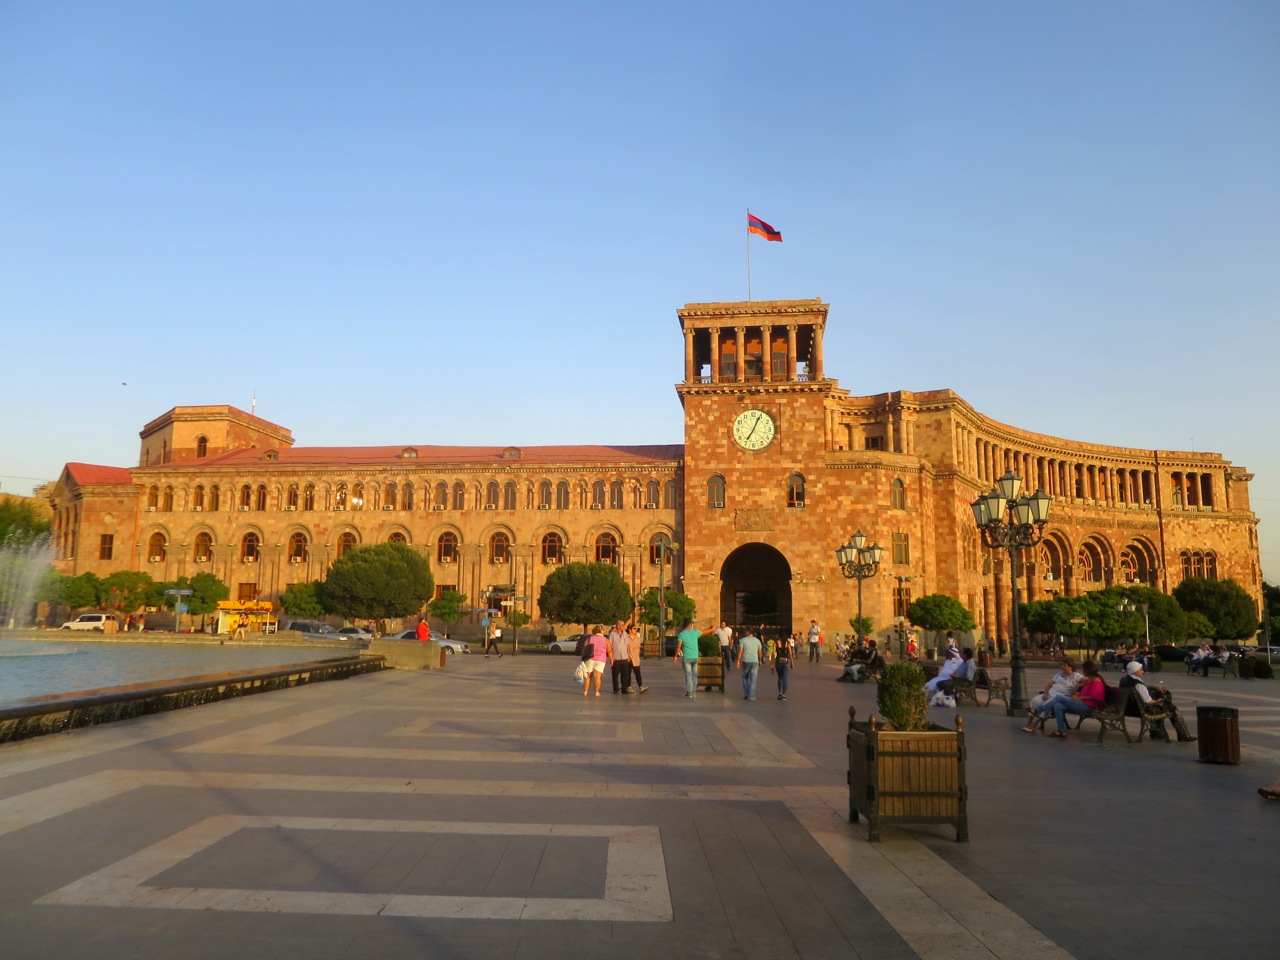 Freedom House on Armenia's achievements